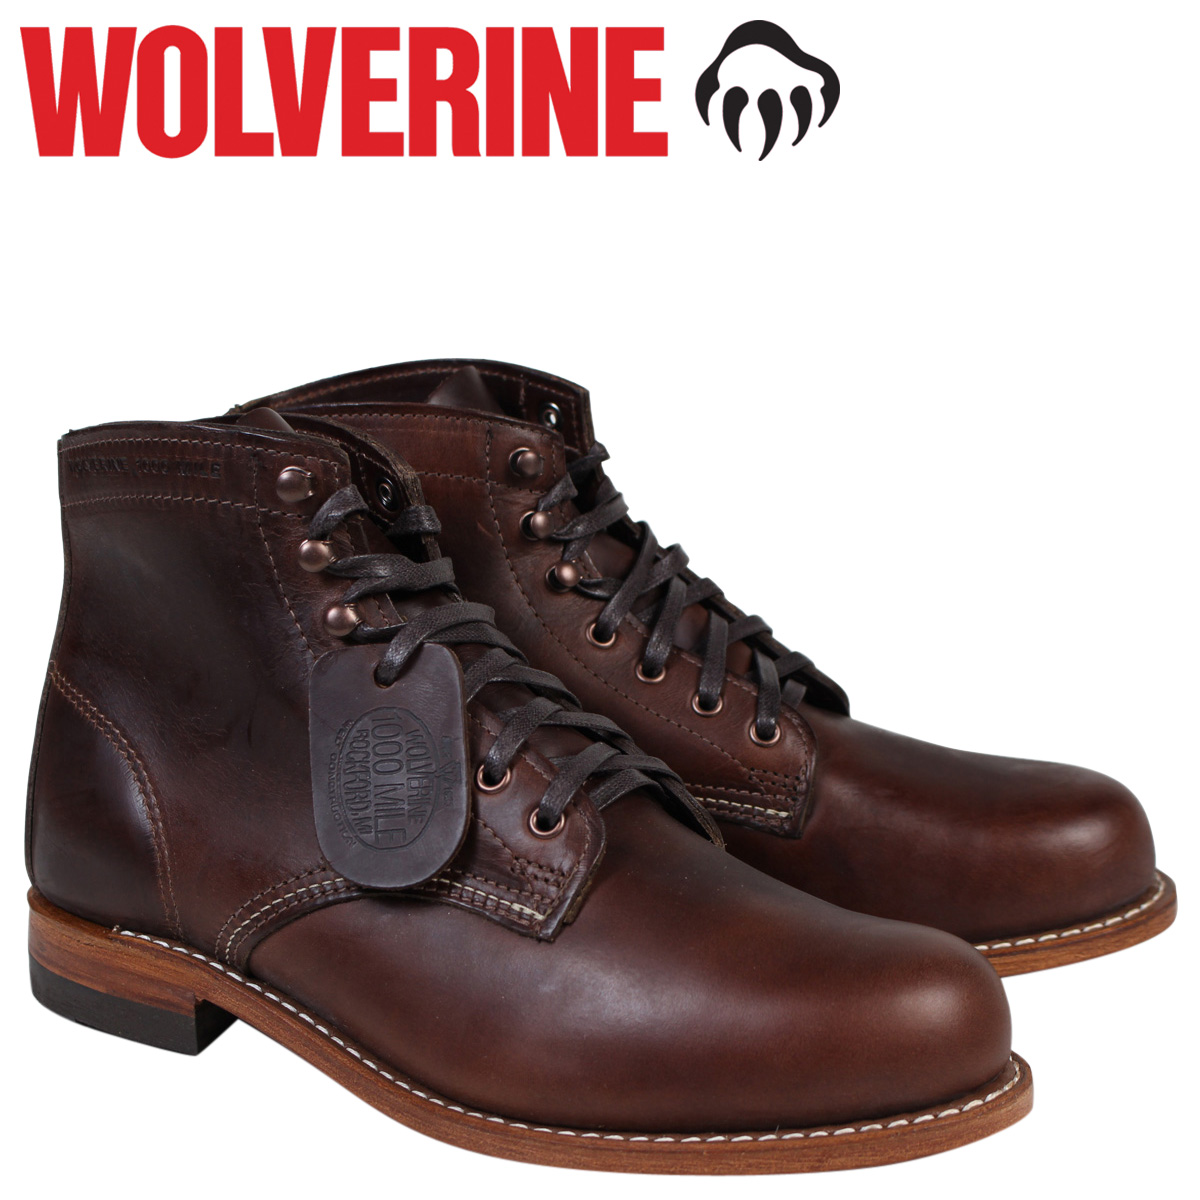 wolverine boots